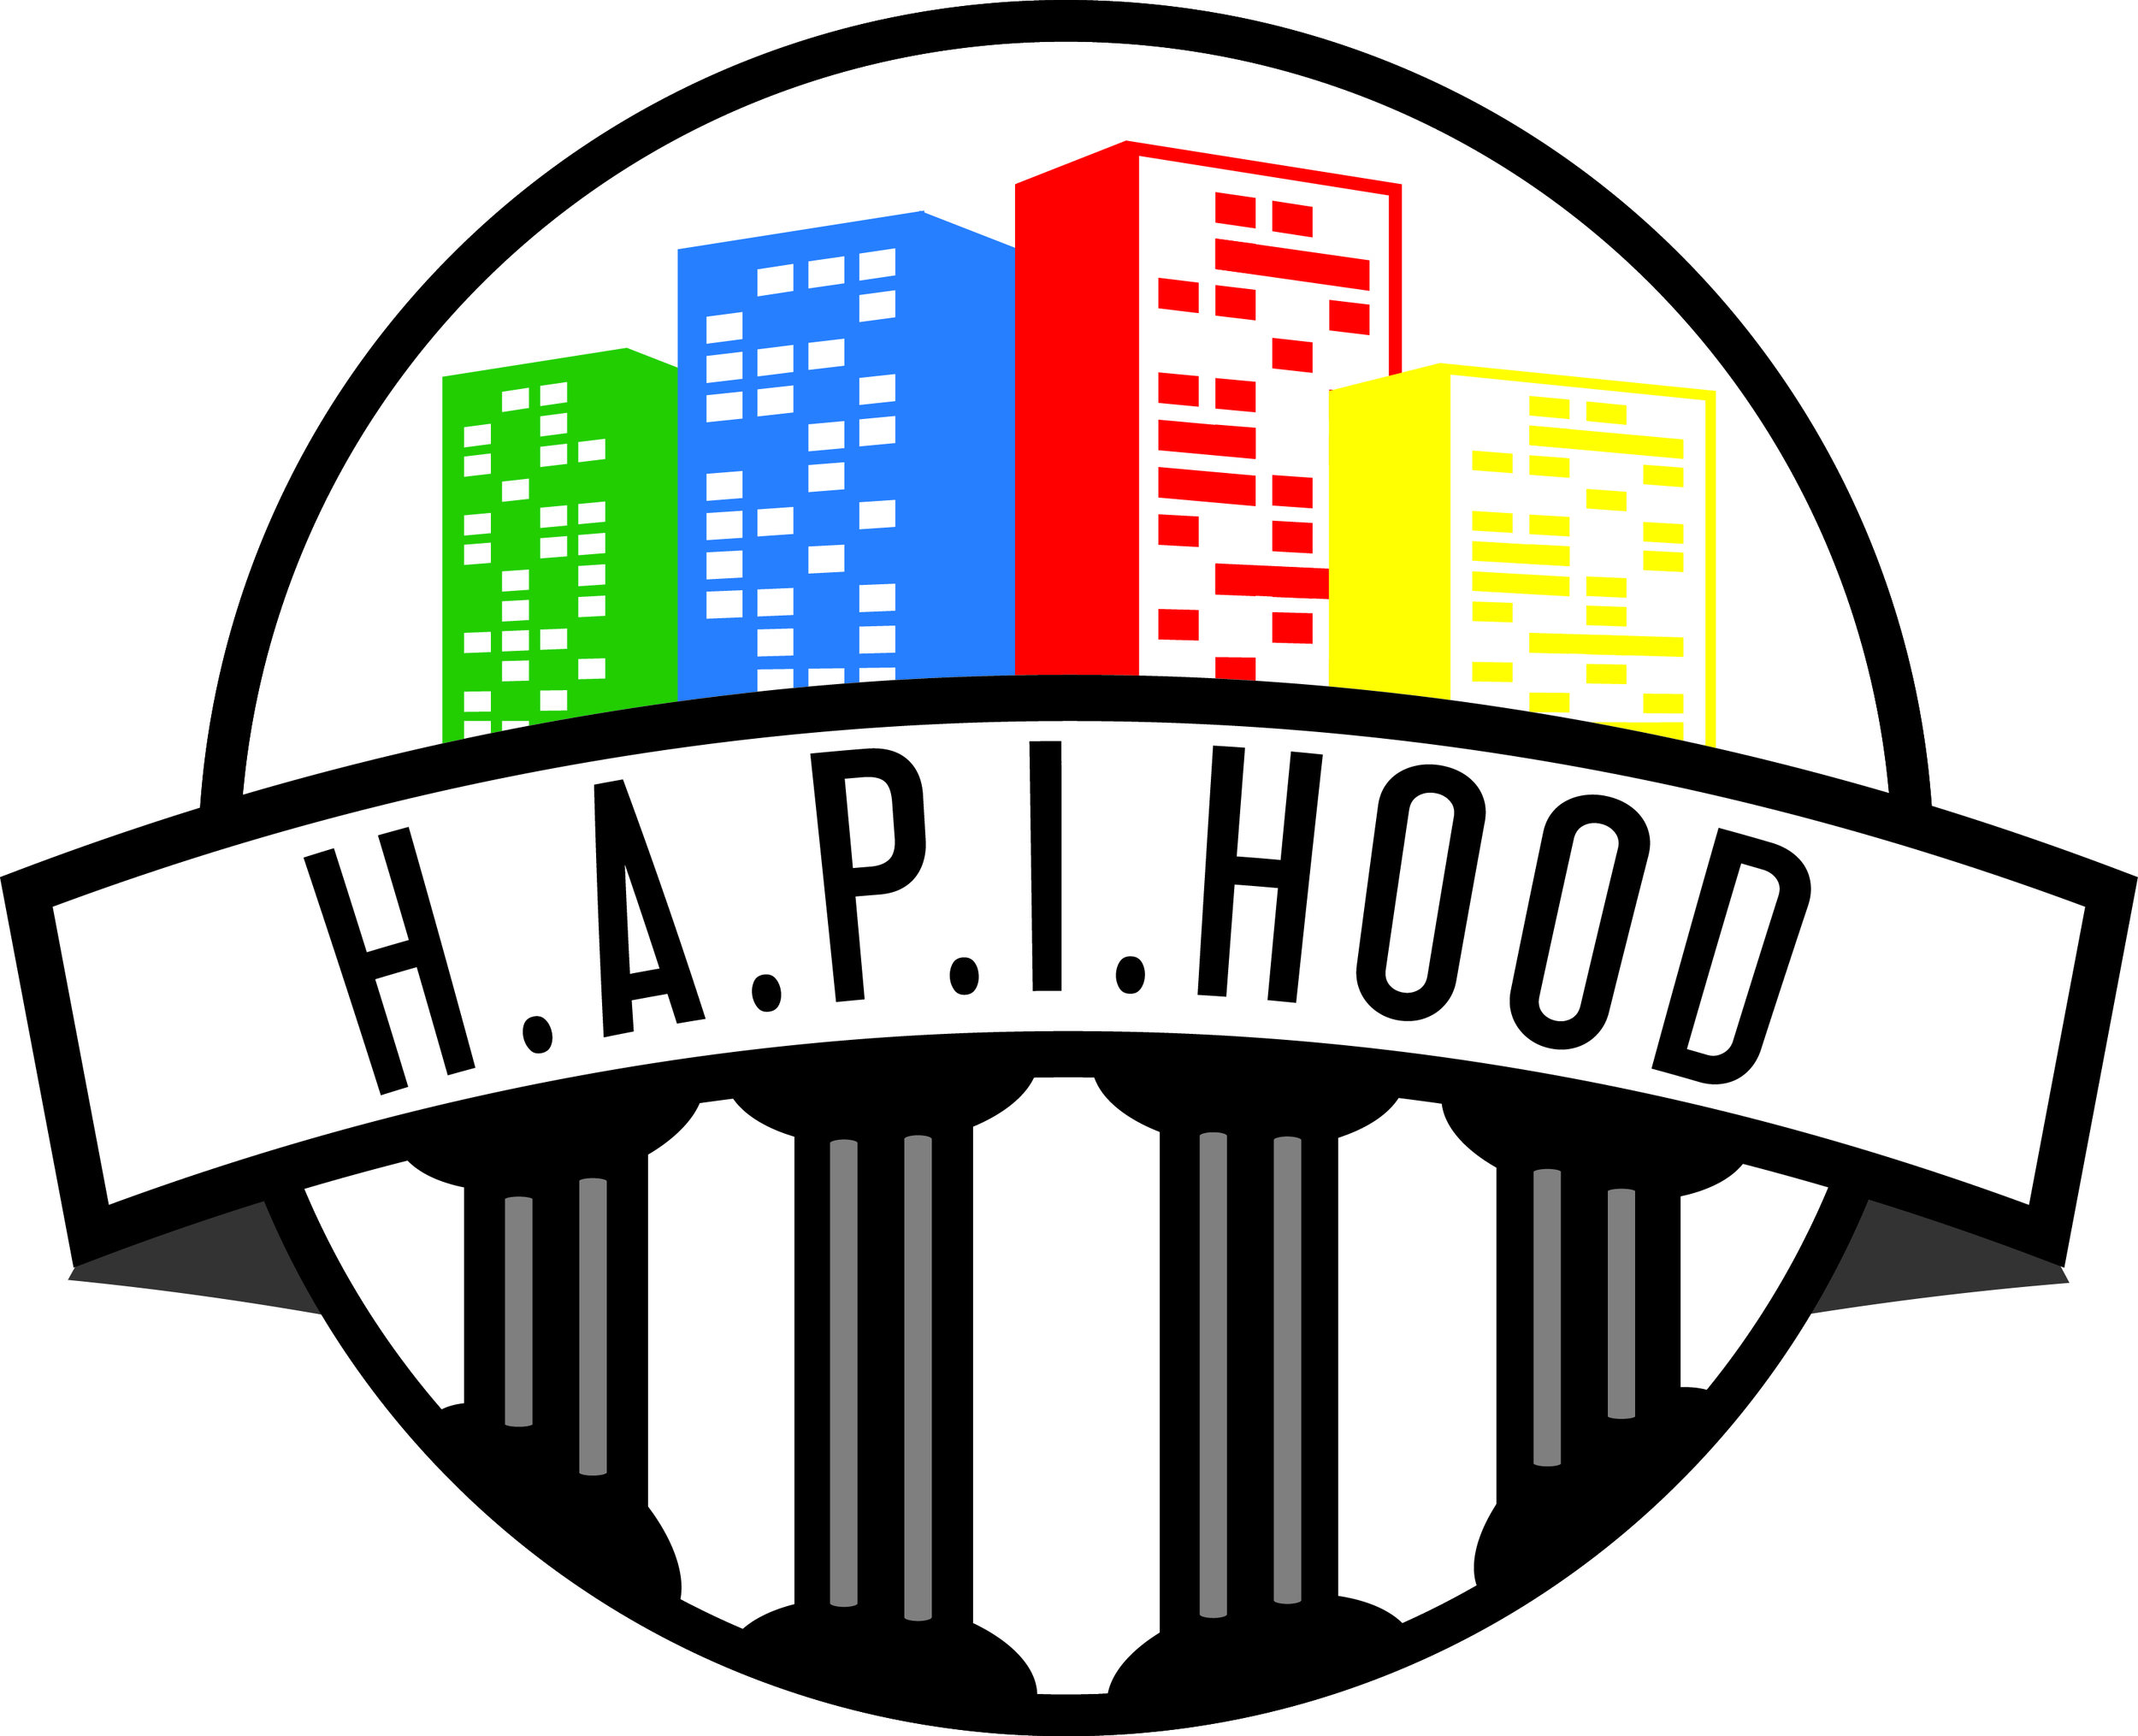 H.A.P.I. HOOD